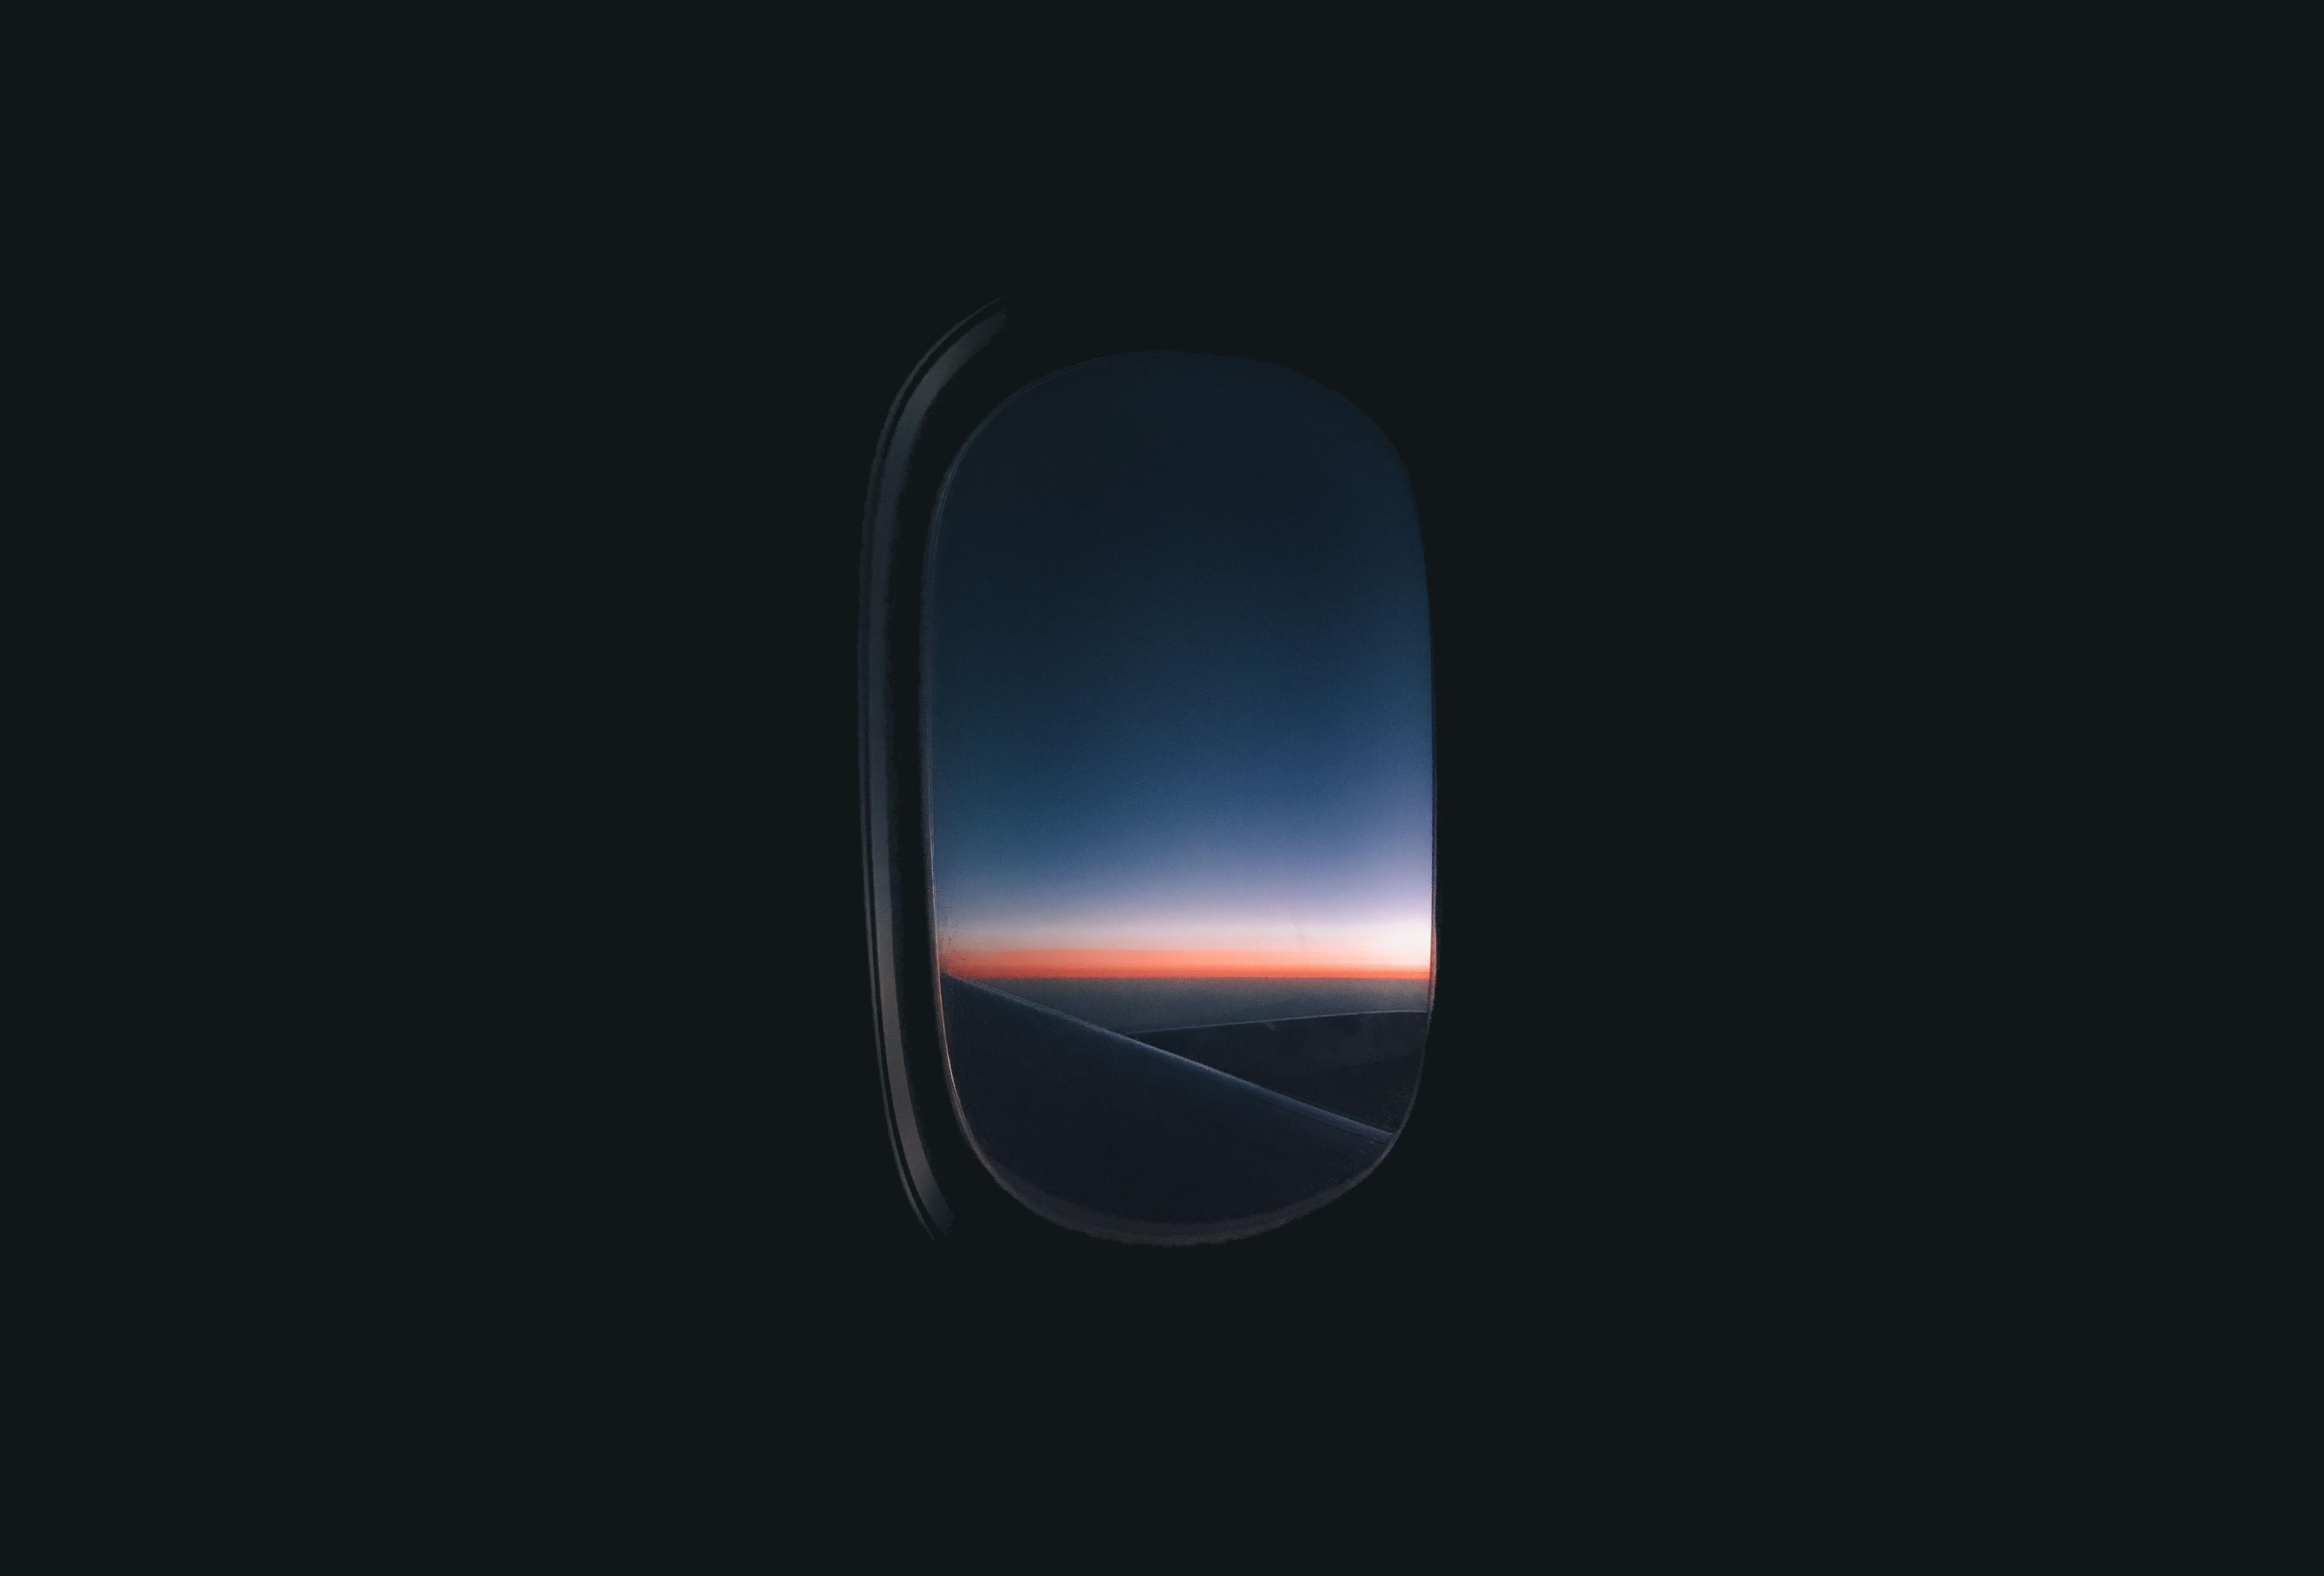 Plane window facing sunrise